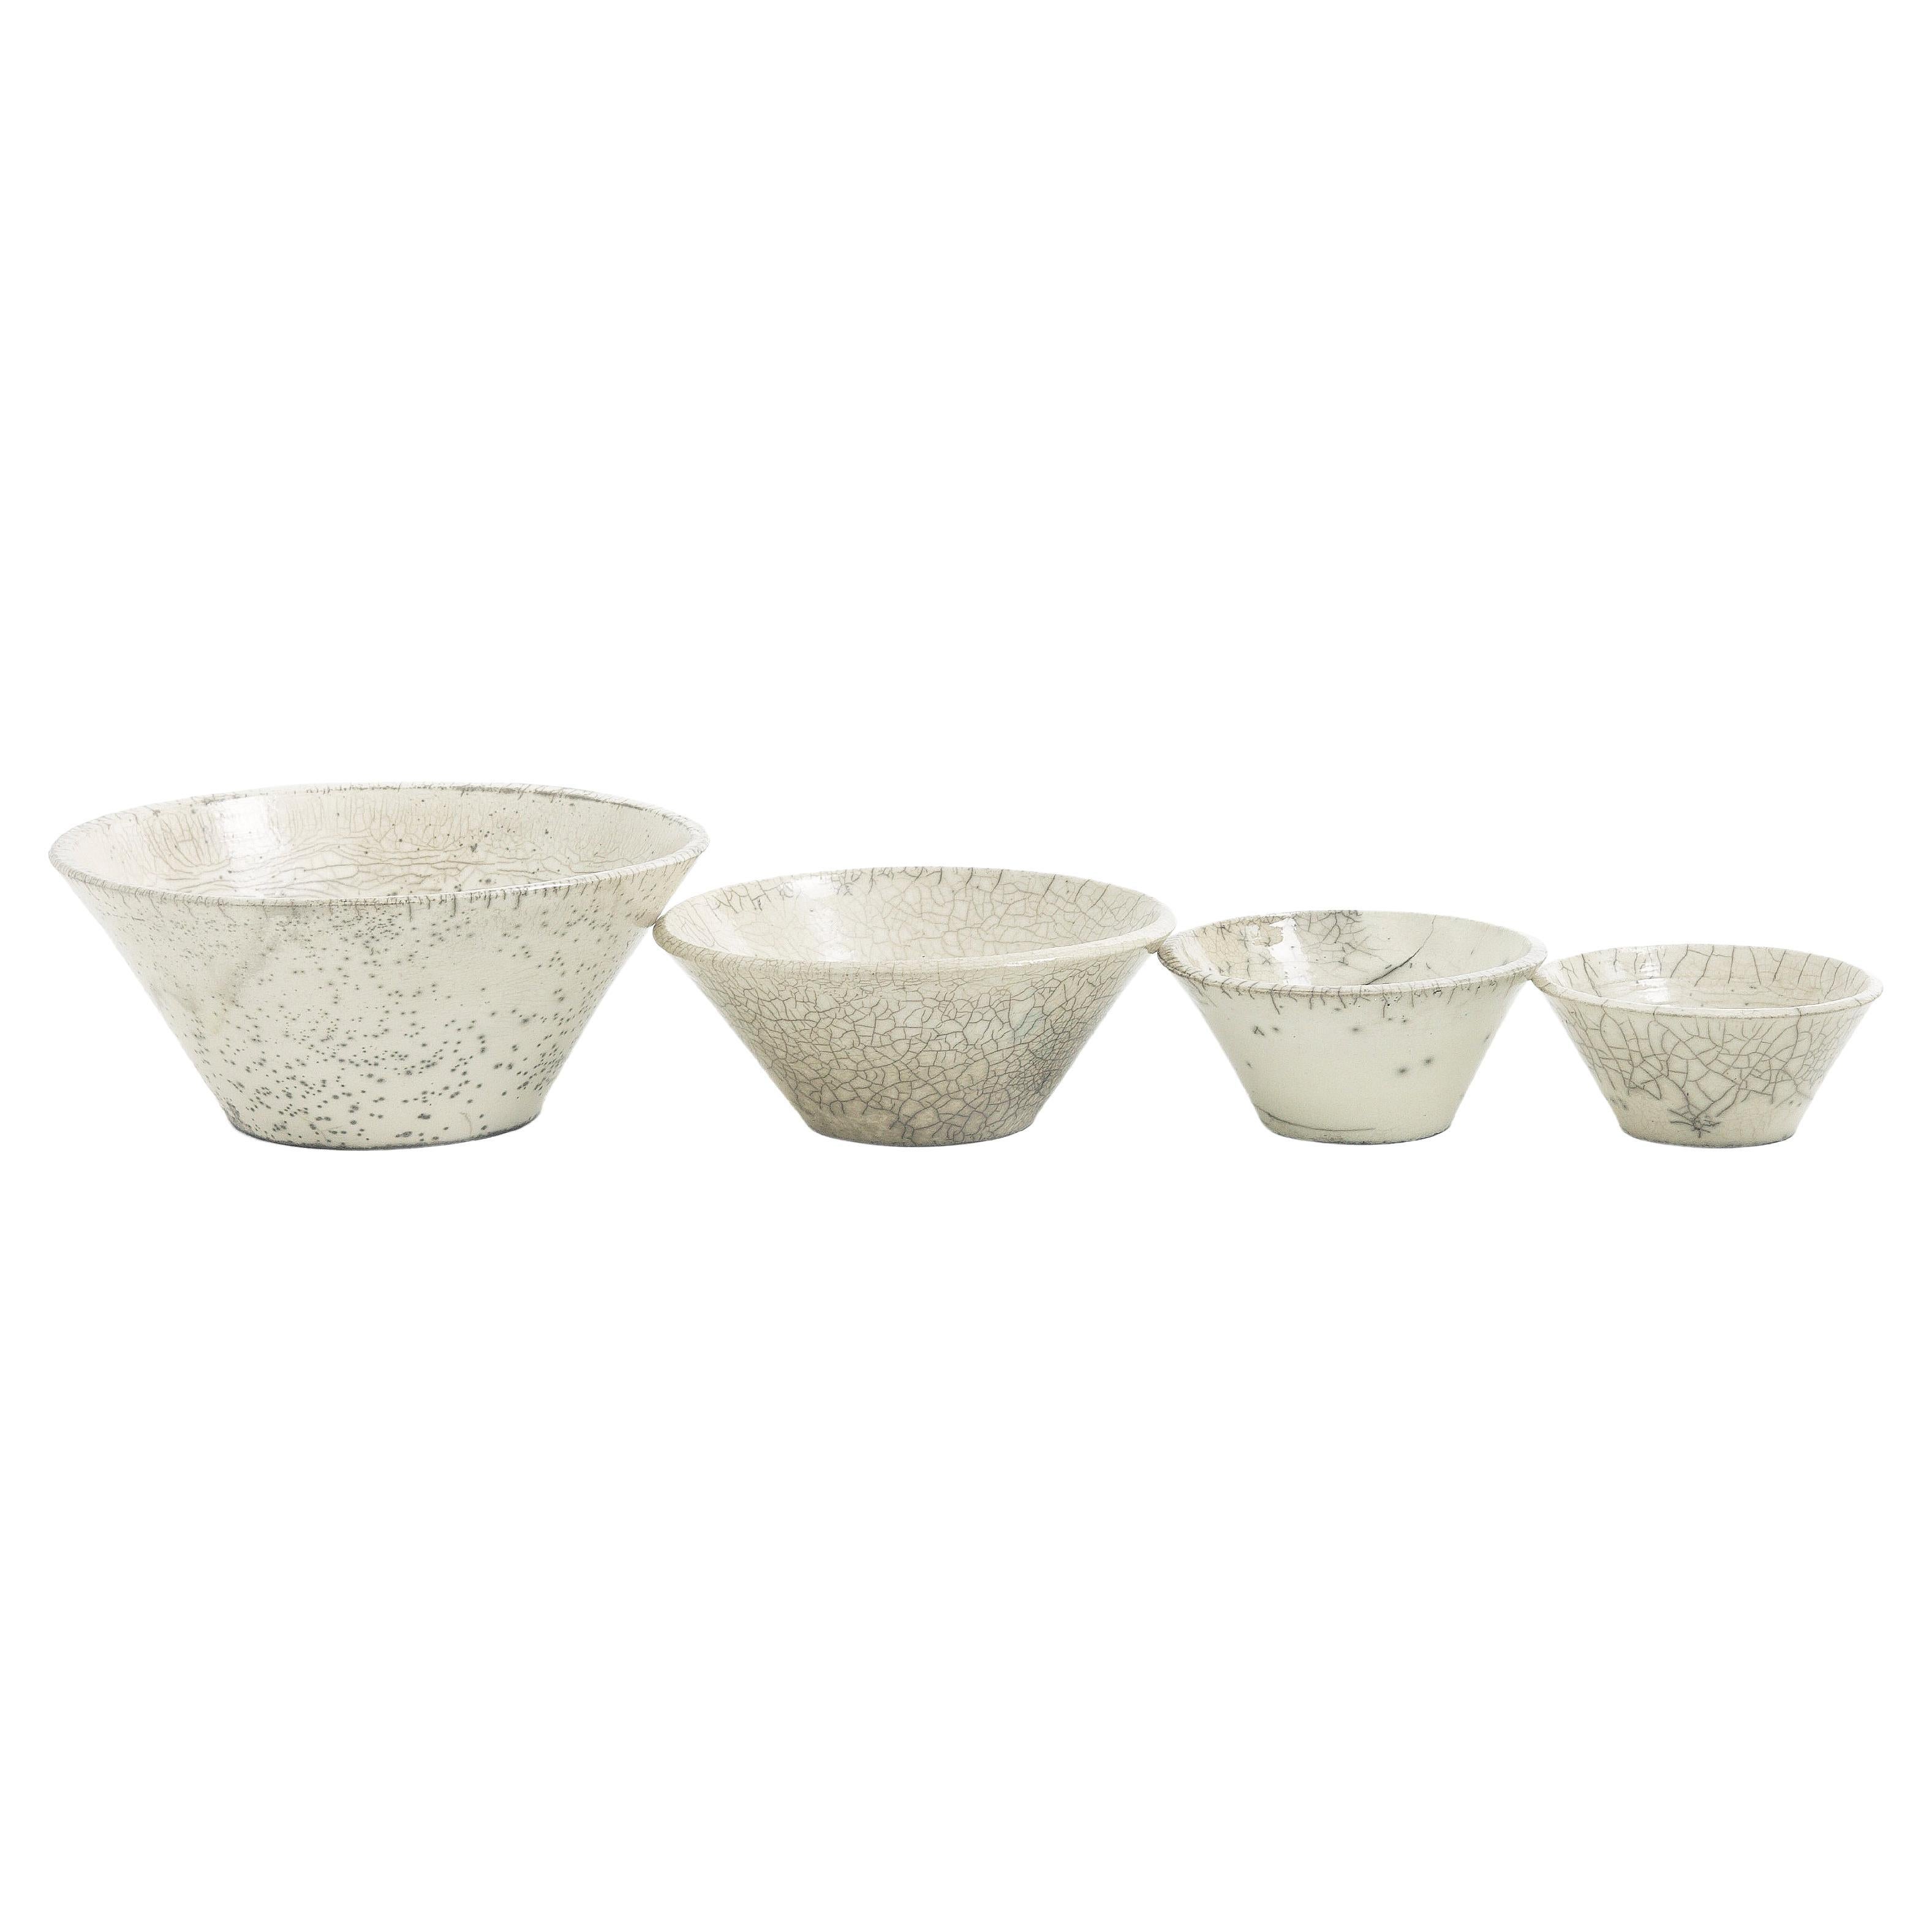 Lot de 4 bols LAAB Moon minimaliste japonais en céramique de raku blanc craquelé